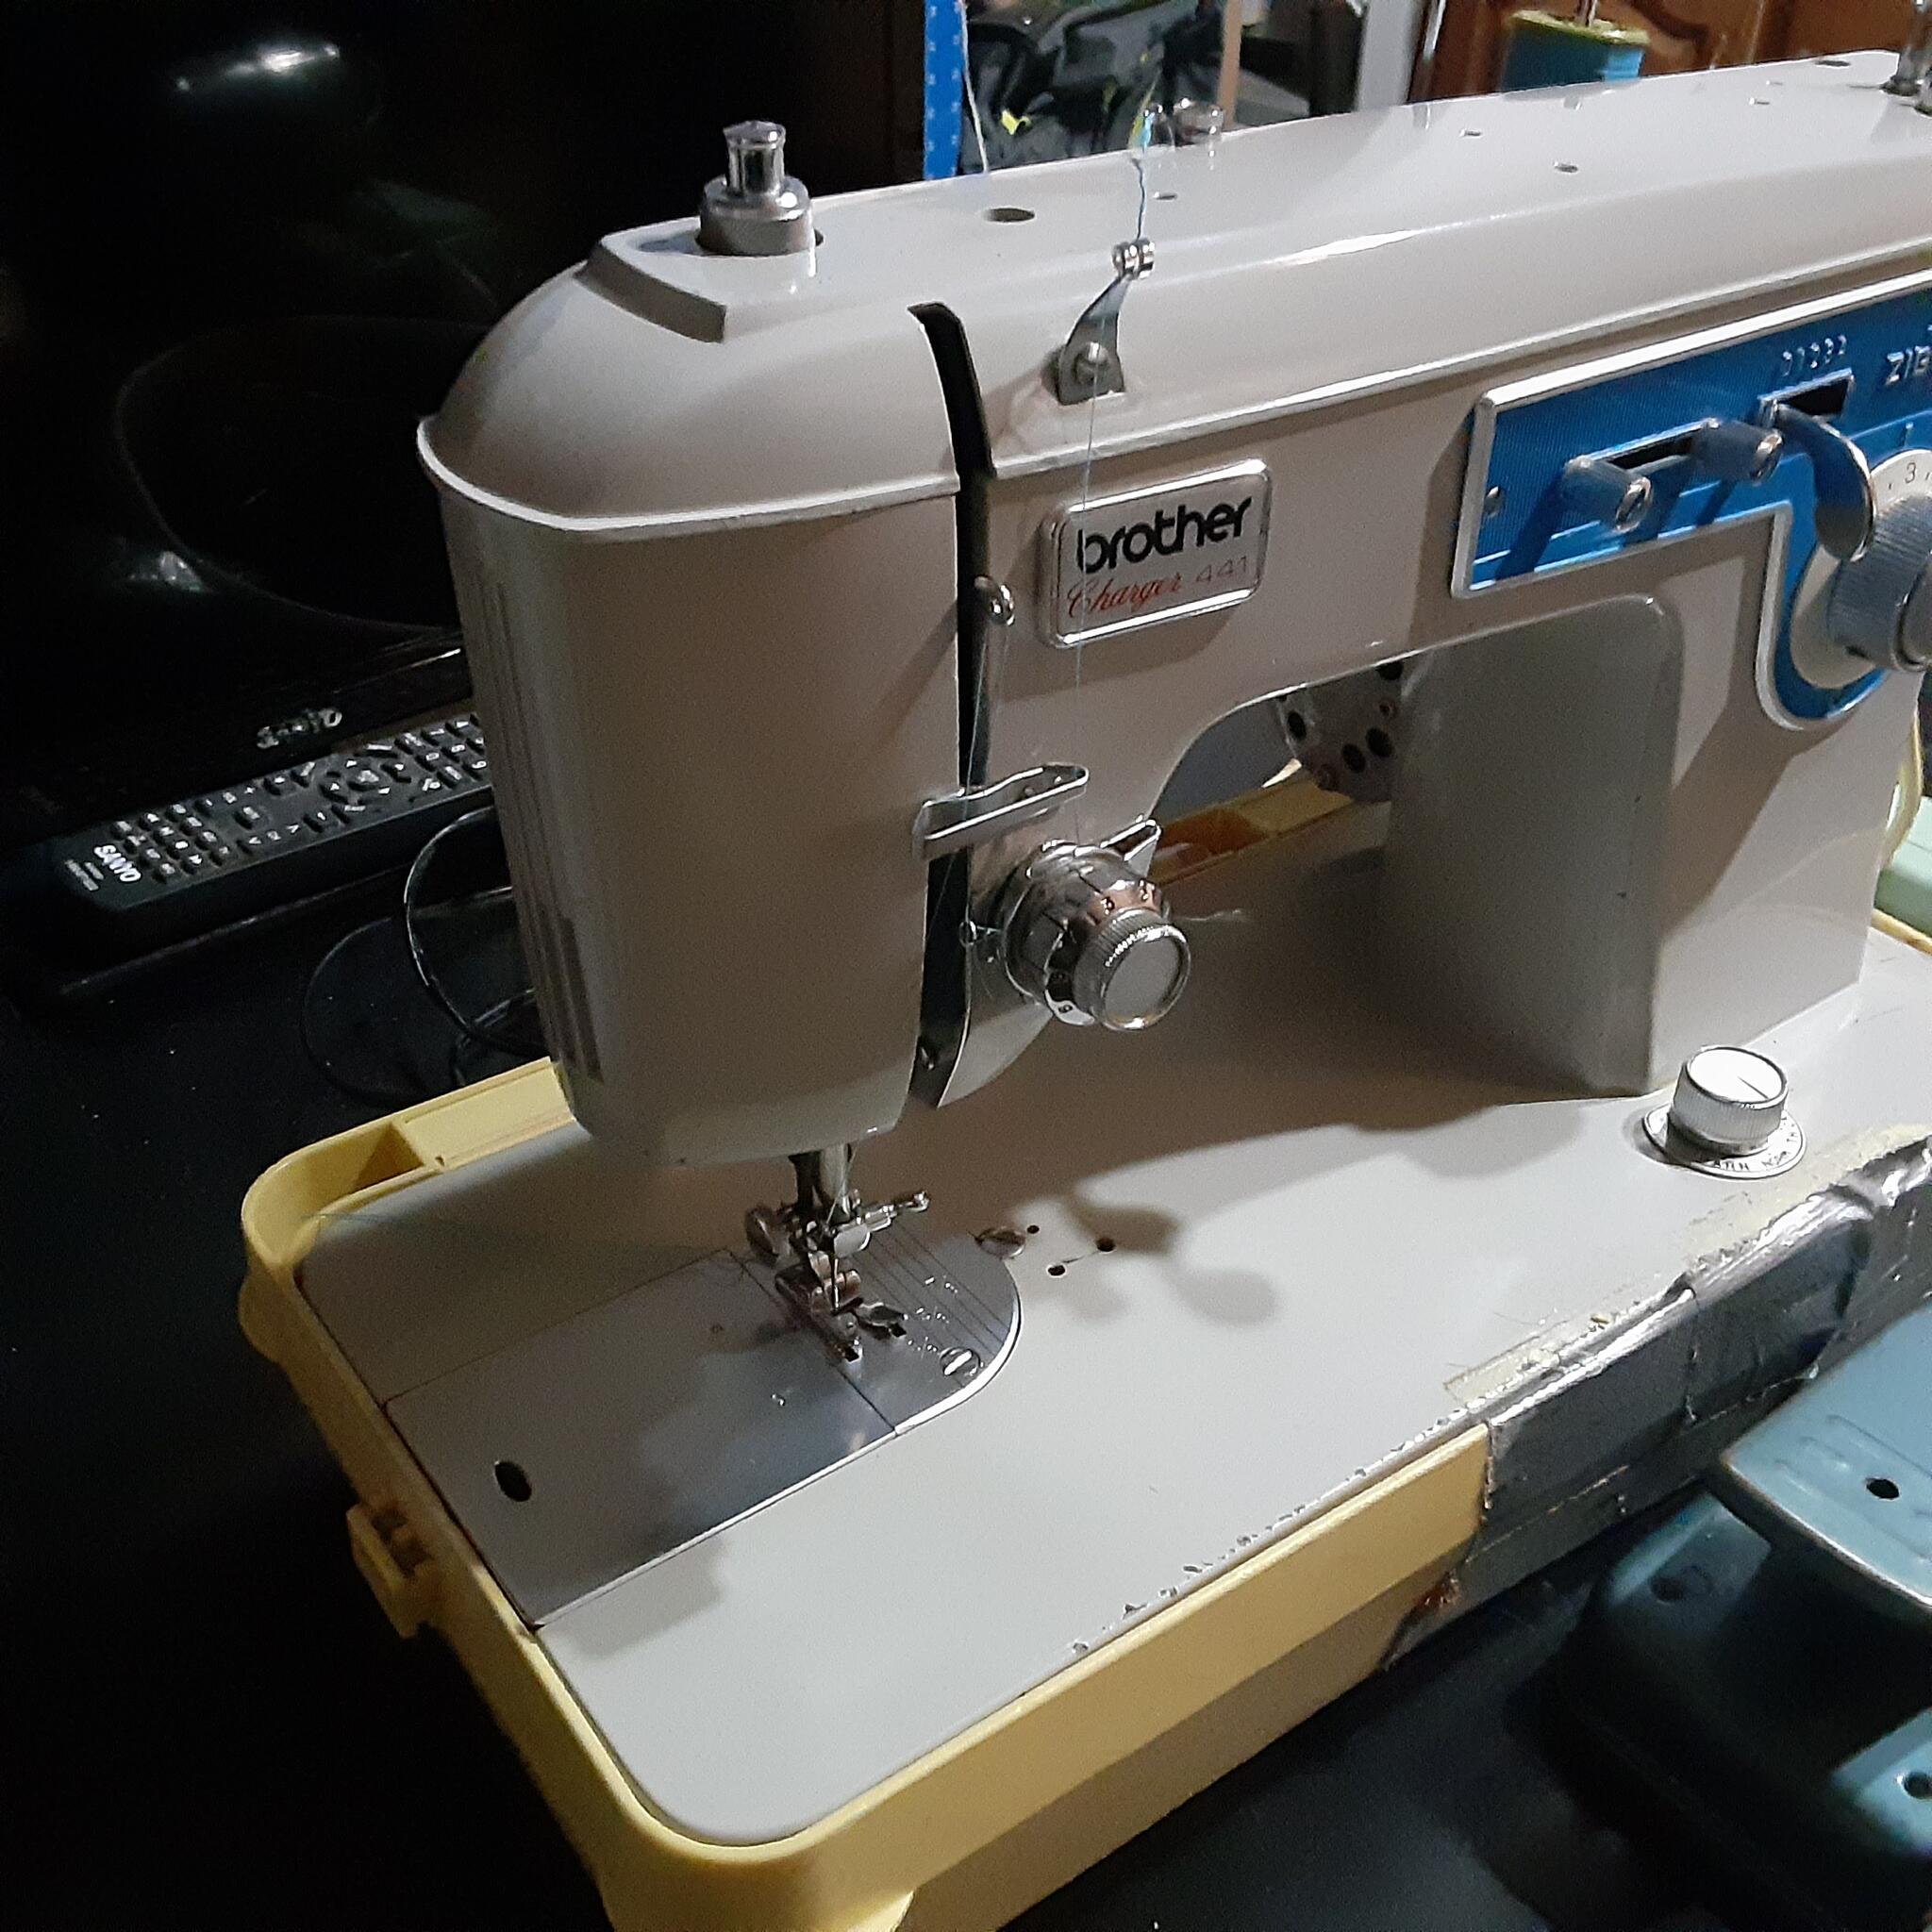 Brother Sewing Machine for Sale in Warren, MI - OfferUp